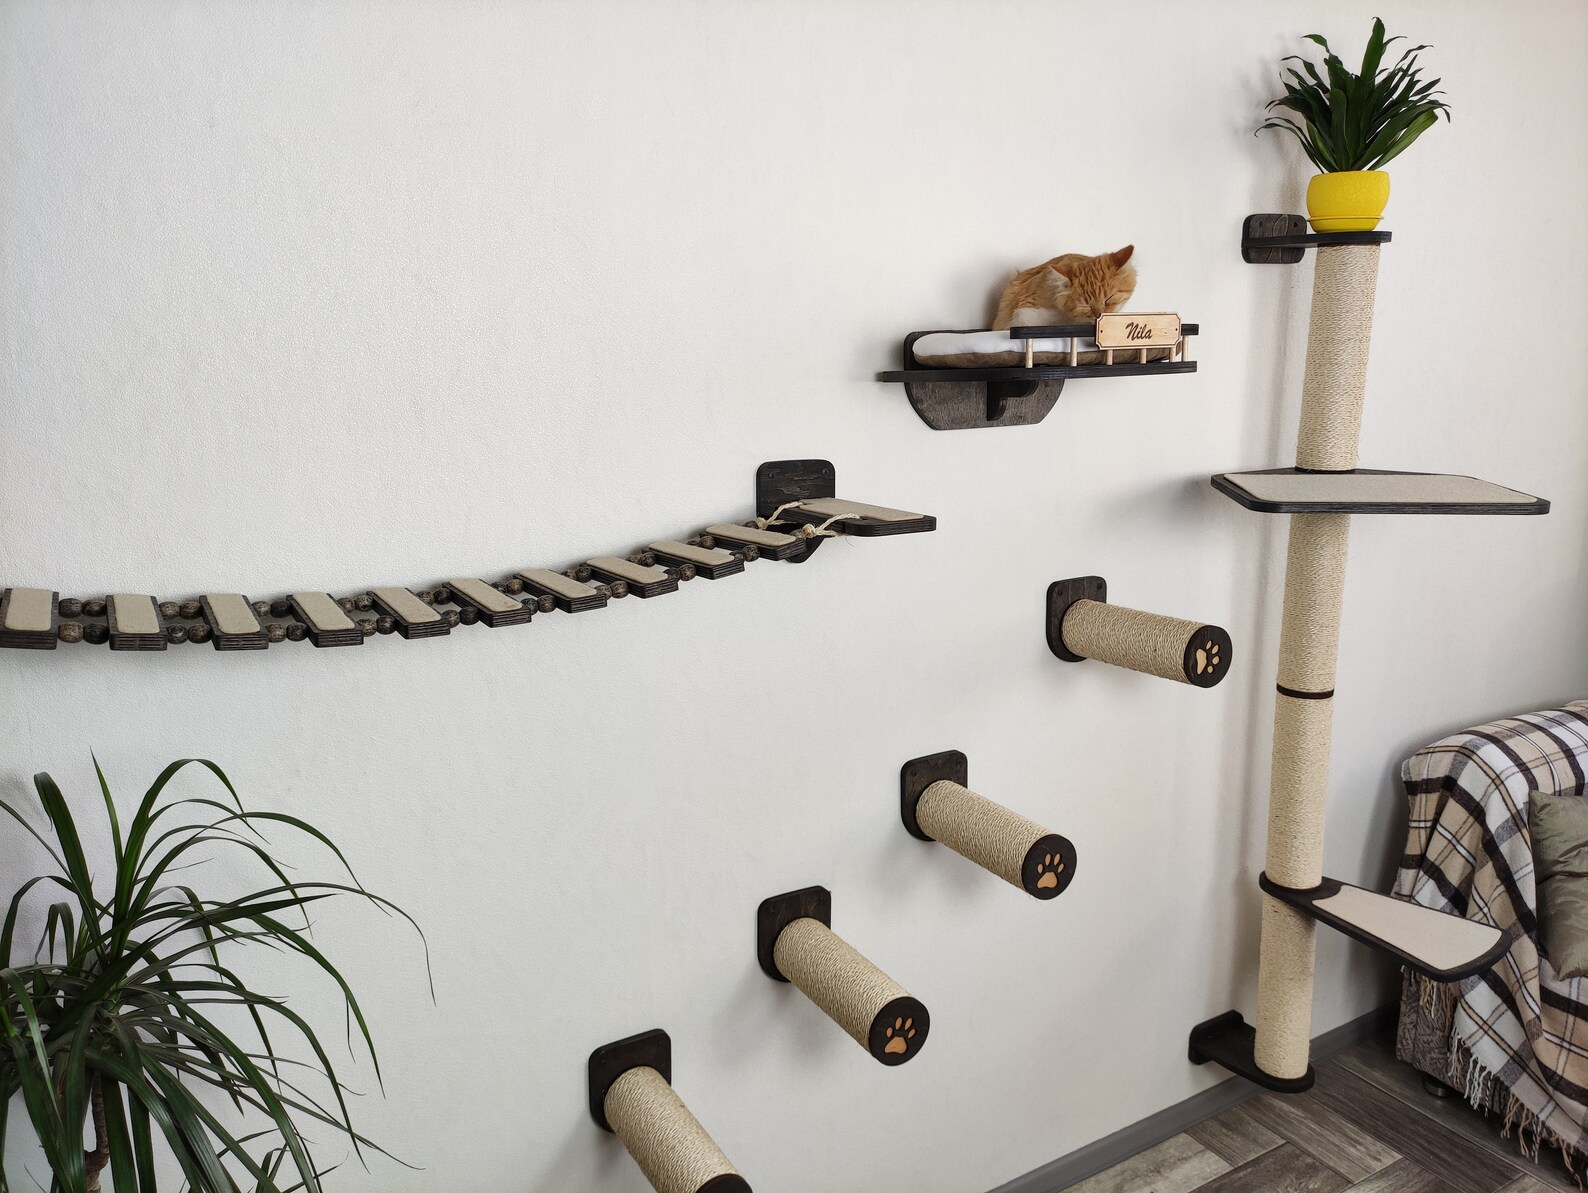 Cat wall furniture / Cat scratching post // Modern design by RshPets - Dark